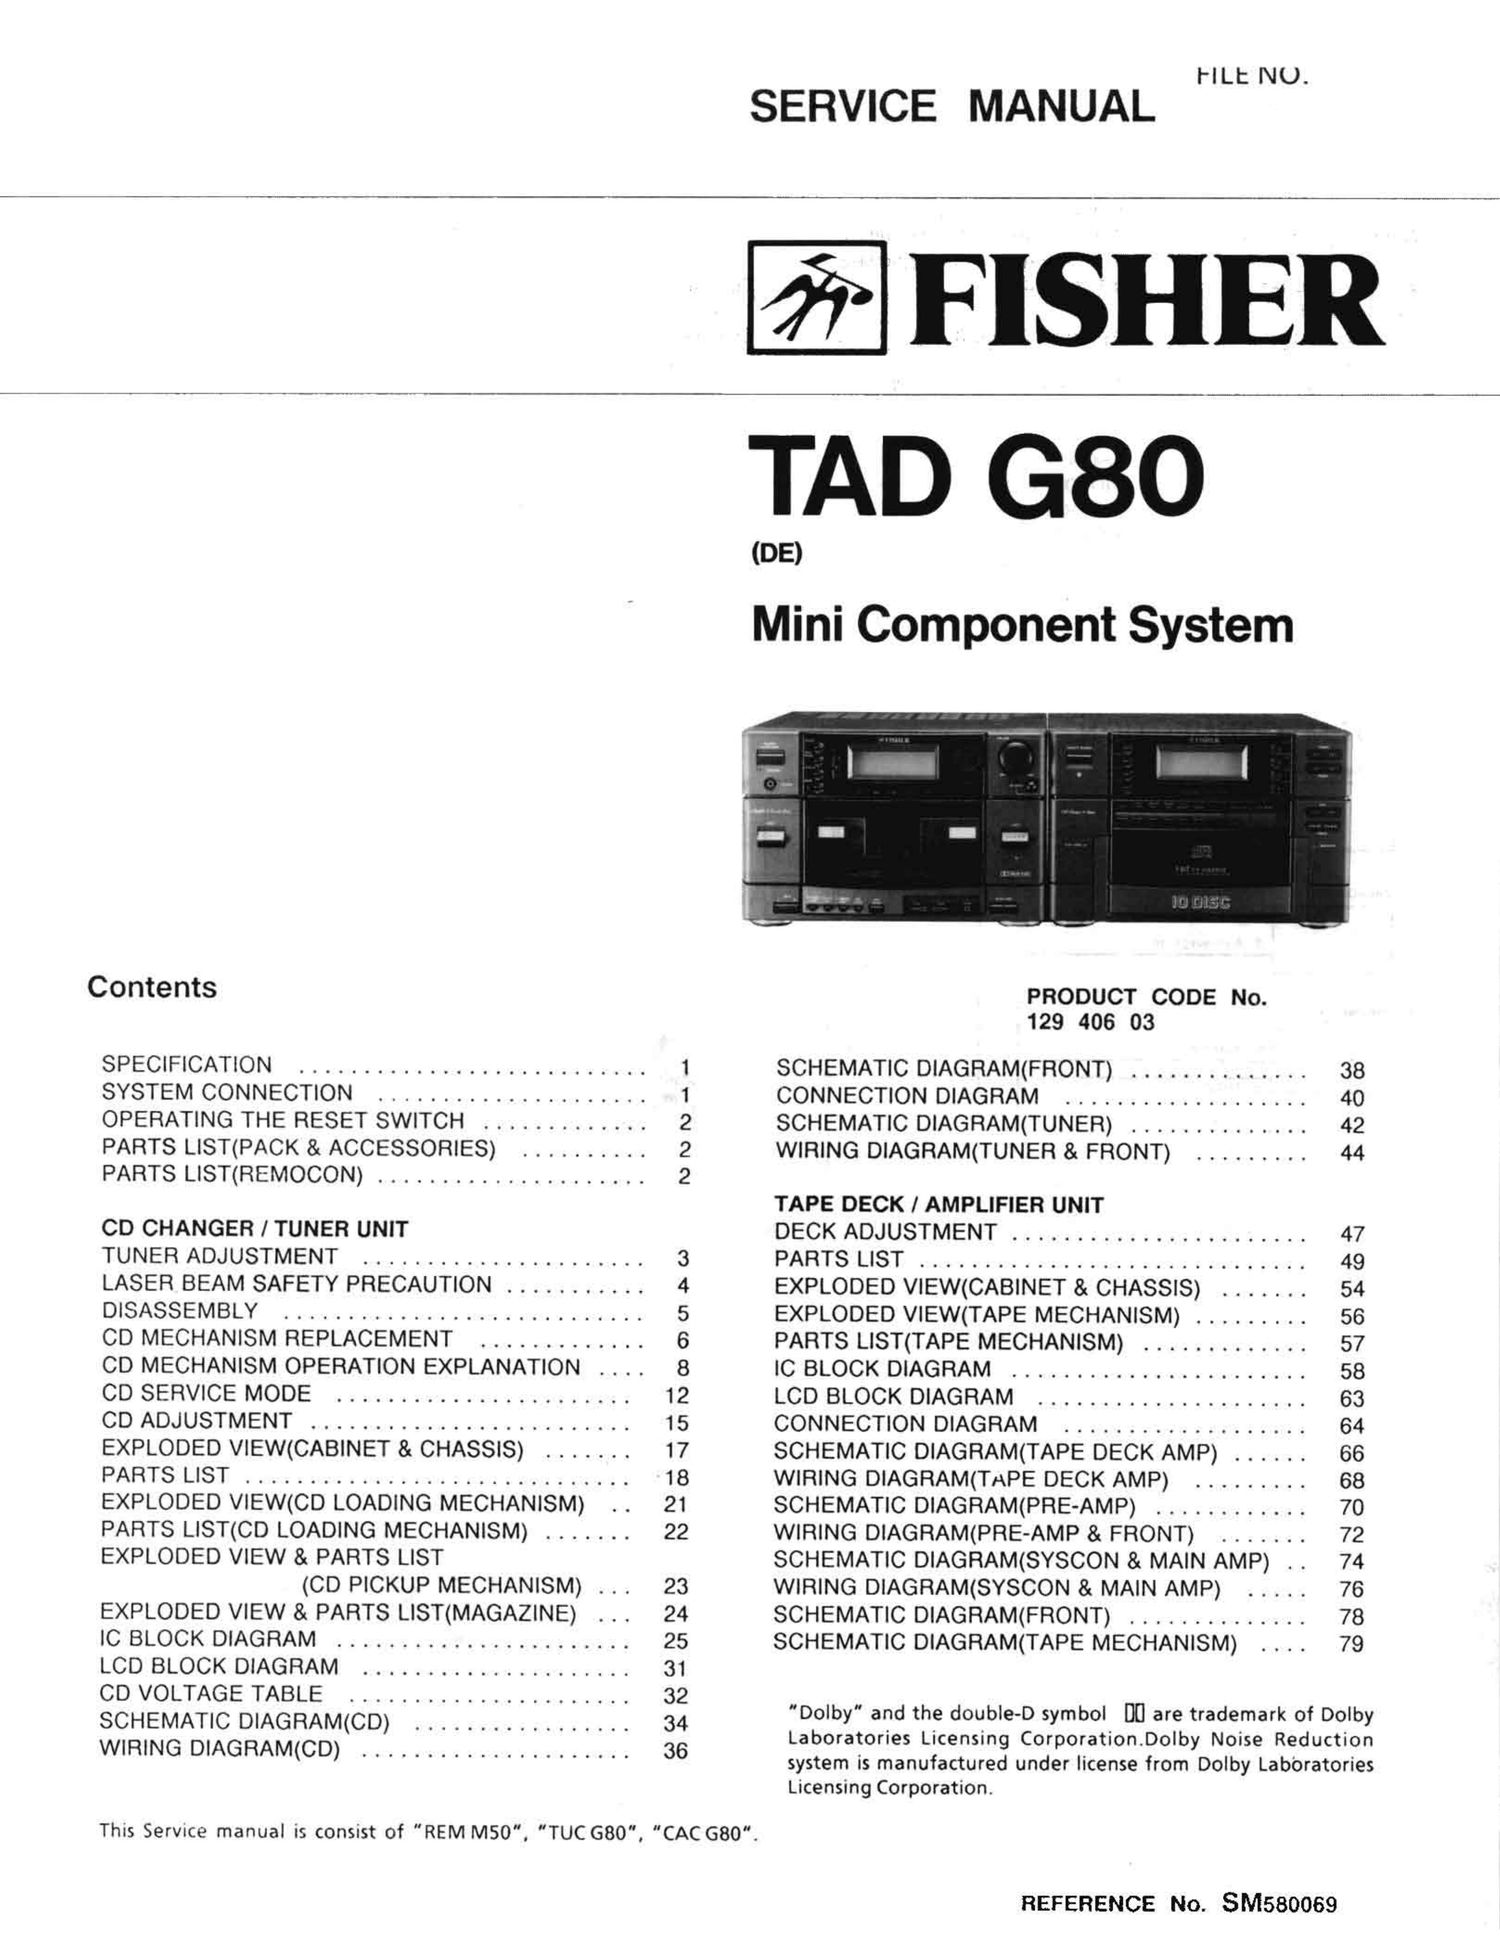 Fisher TAD G80 Schematic